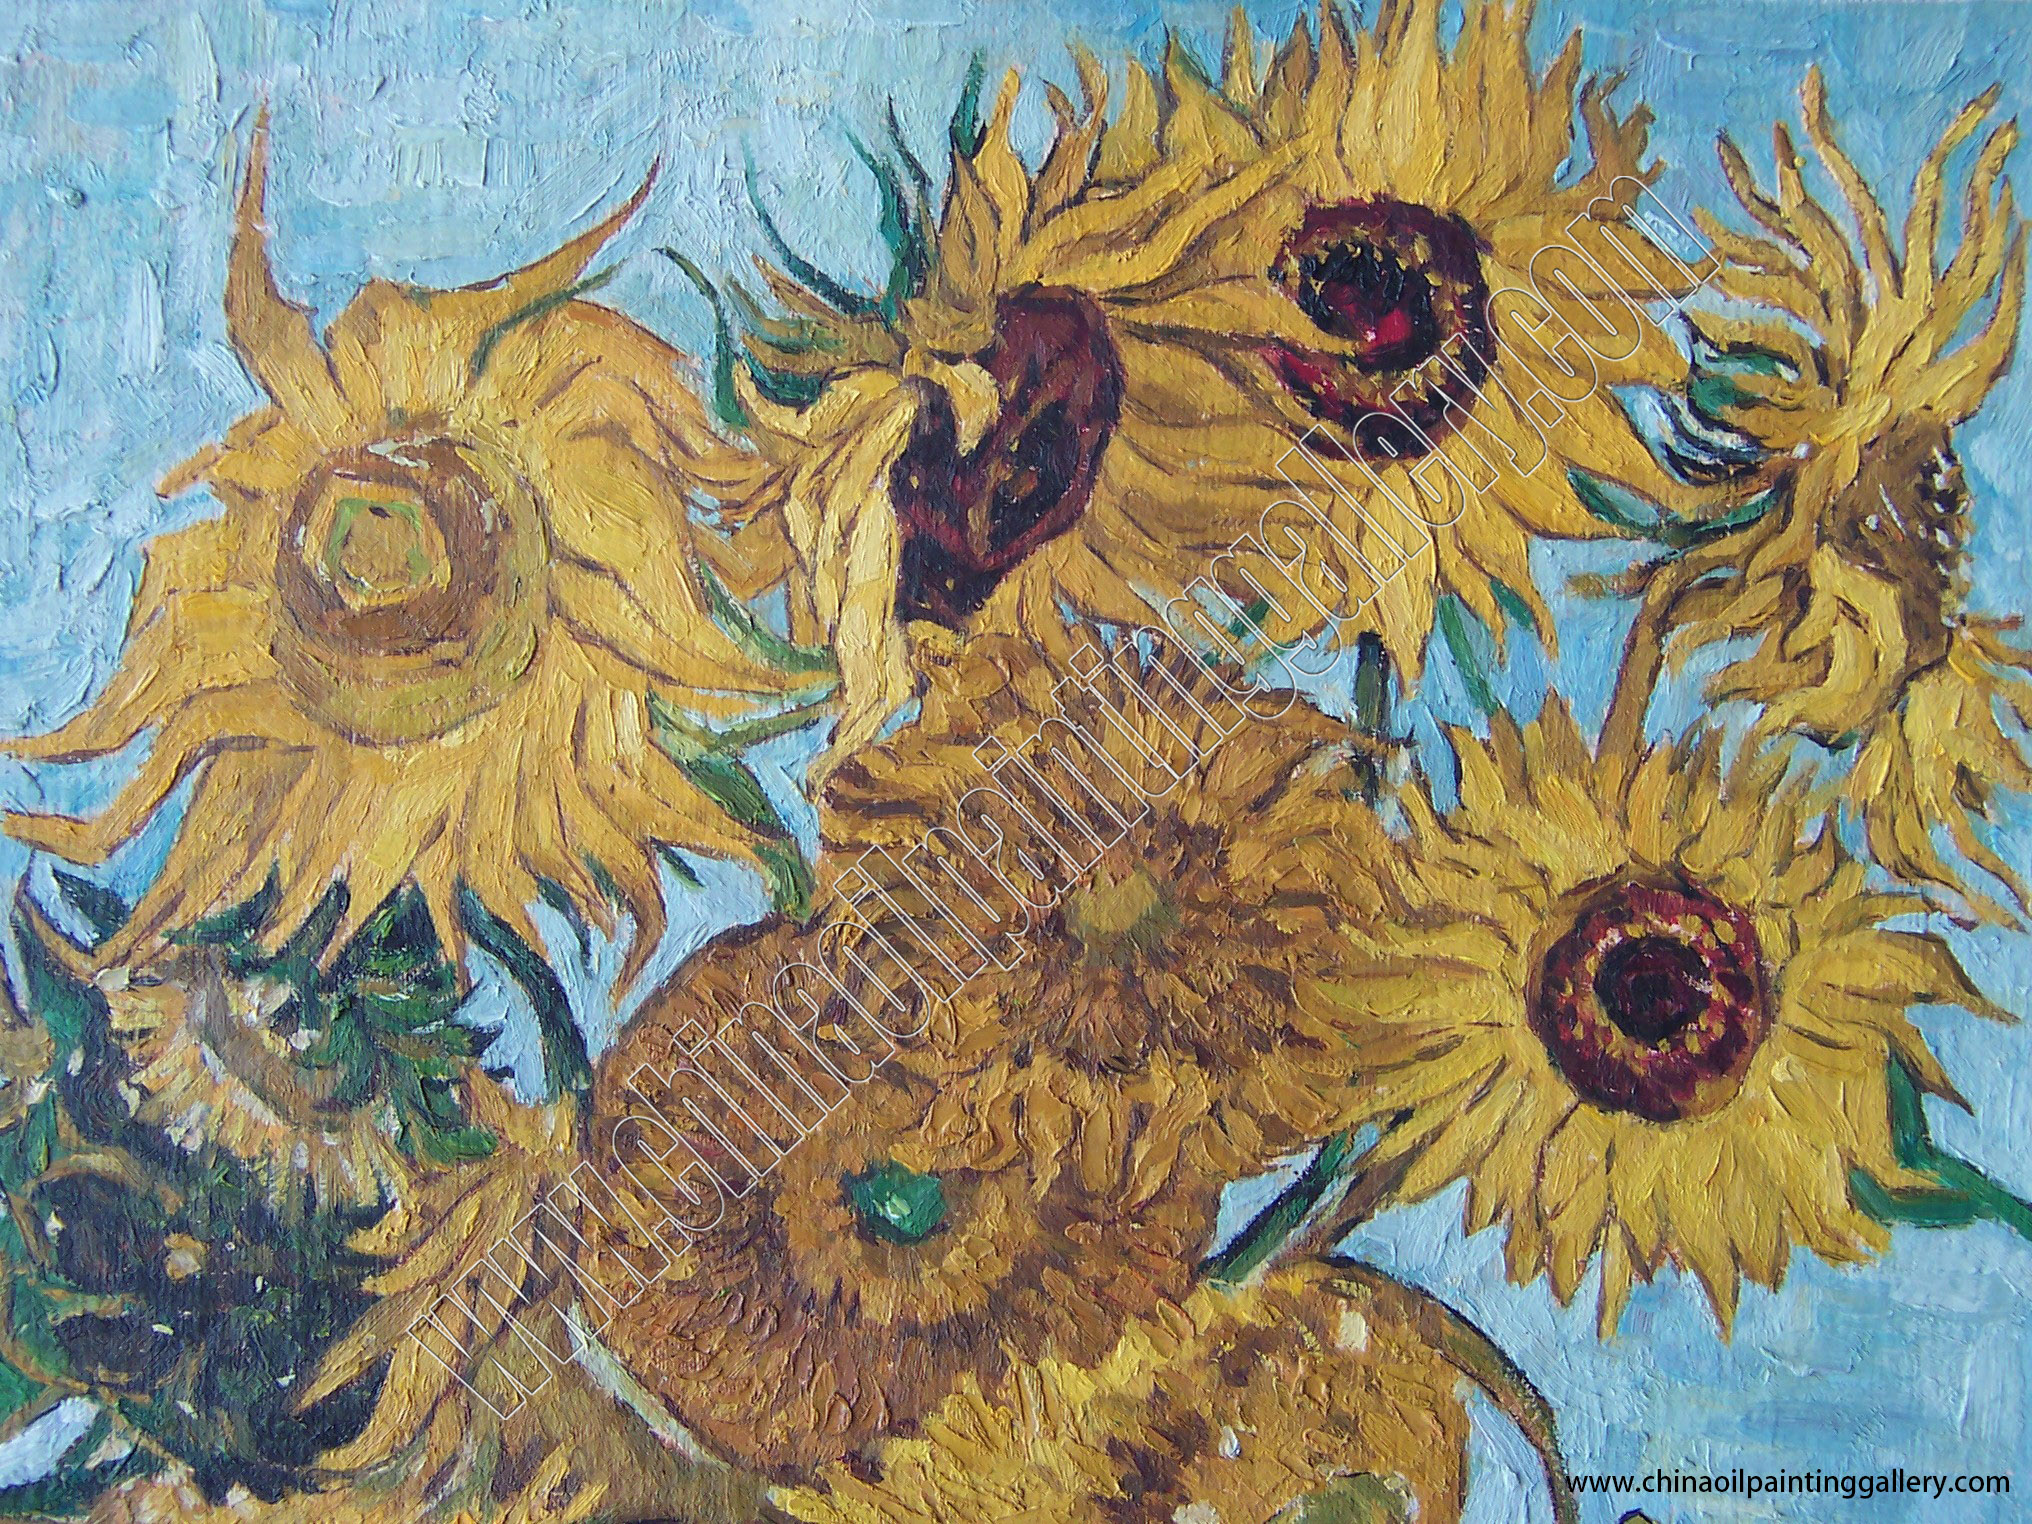 Vincent van Gogh Sunflowers - Oil painting reproductions details 8